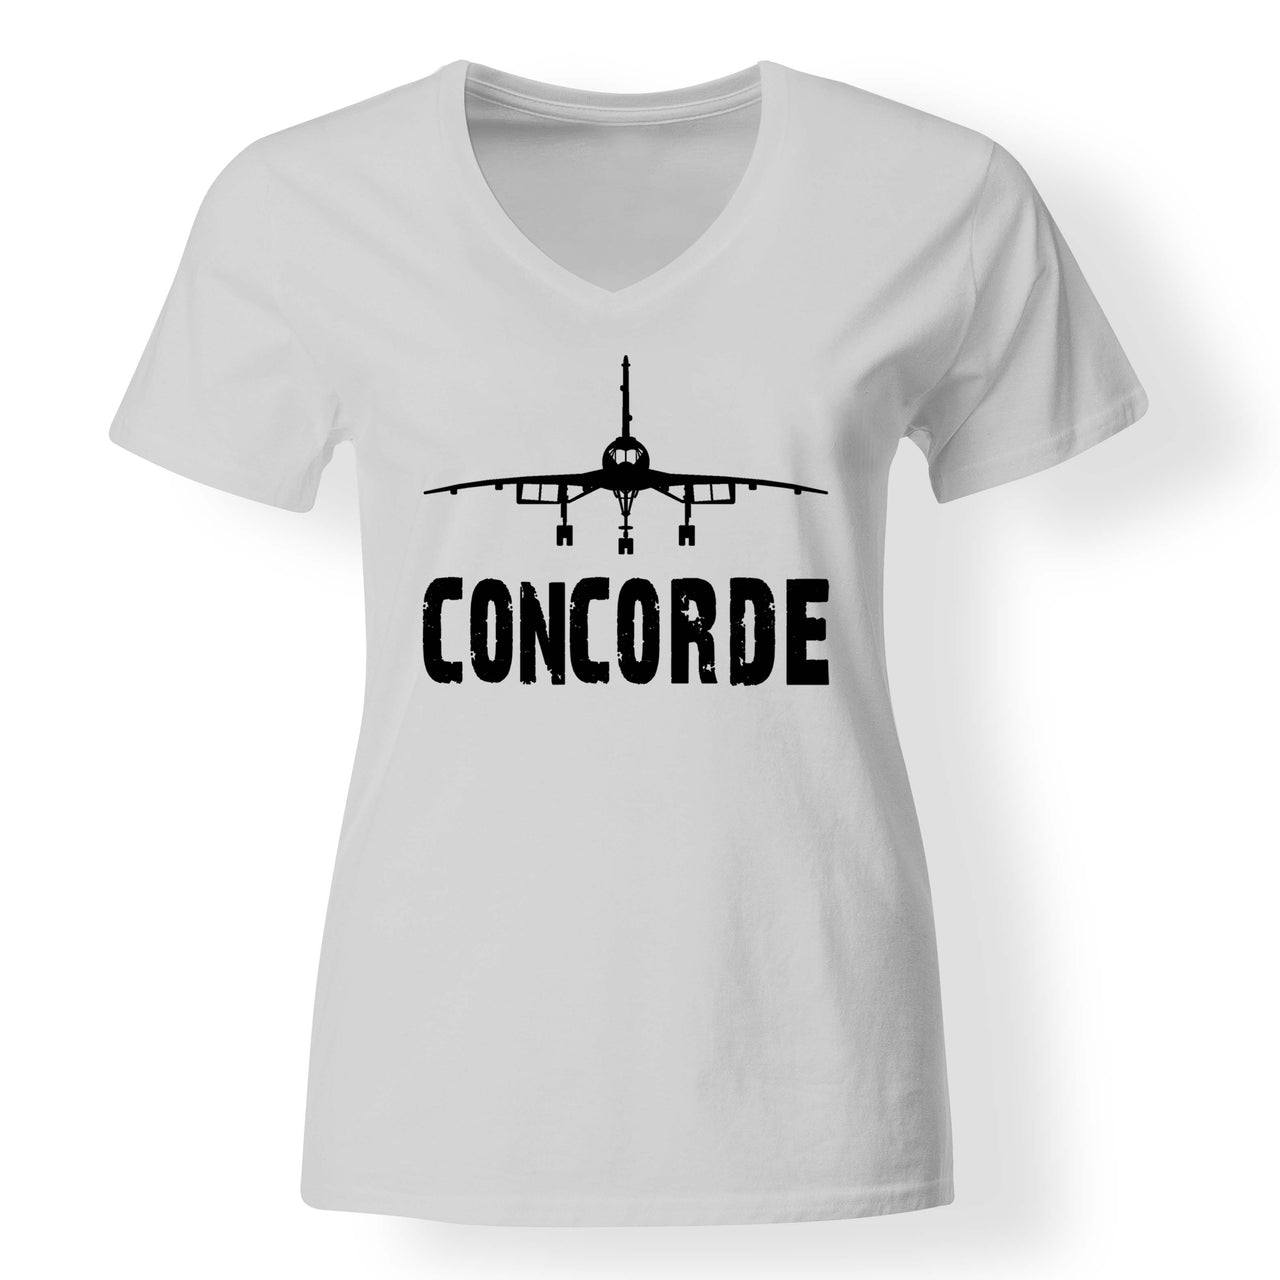 Concorde & Plane Designed V-Neck T-Shirts